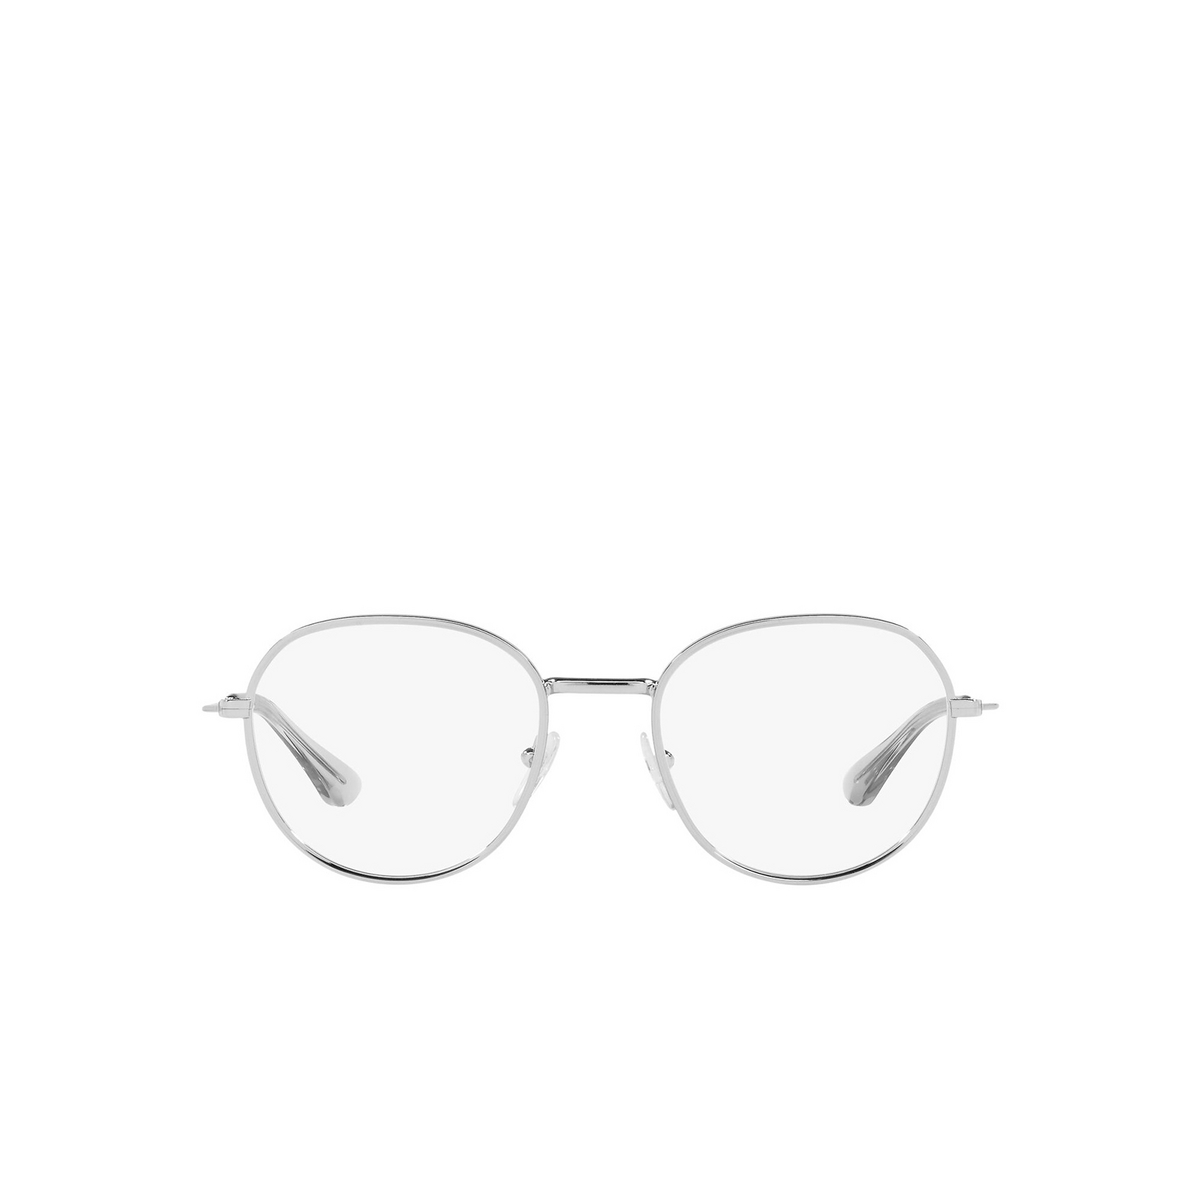 Prada® Oval Eyeglasses: PR 65WV color Silver 1BC1O1 - front view.